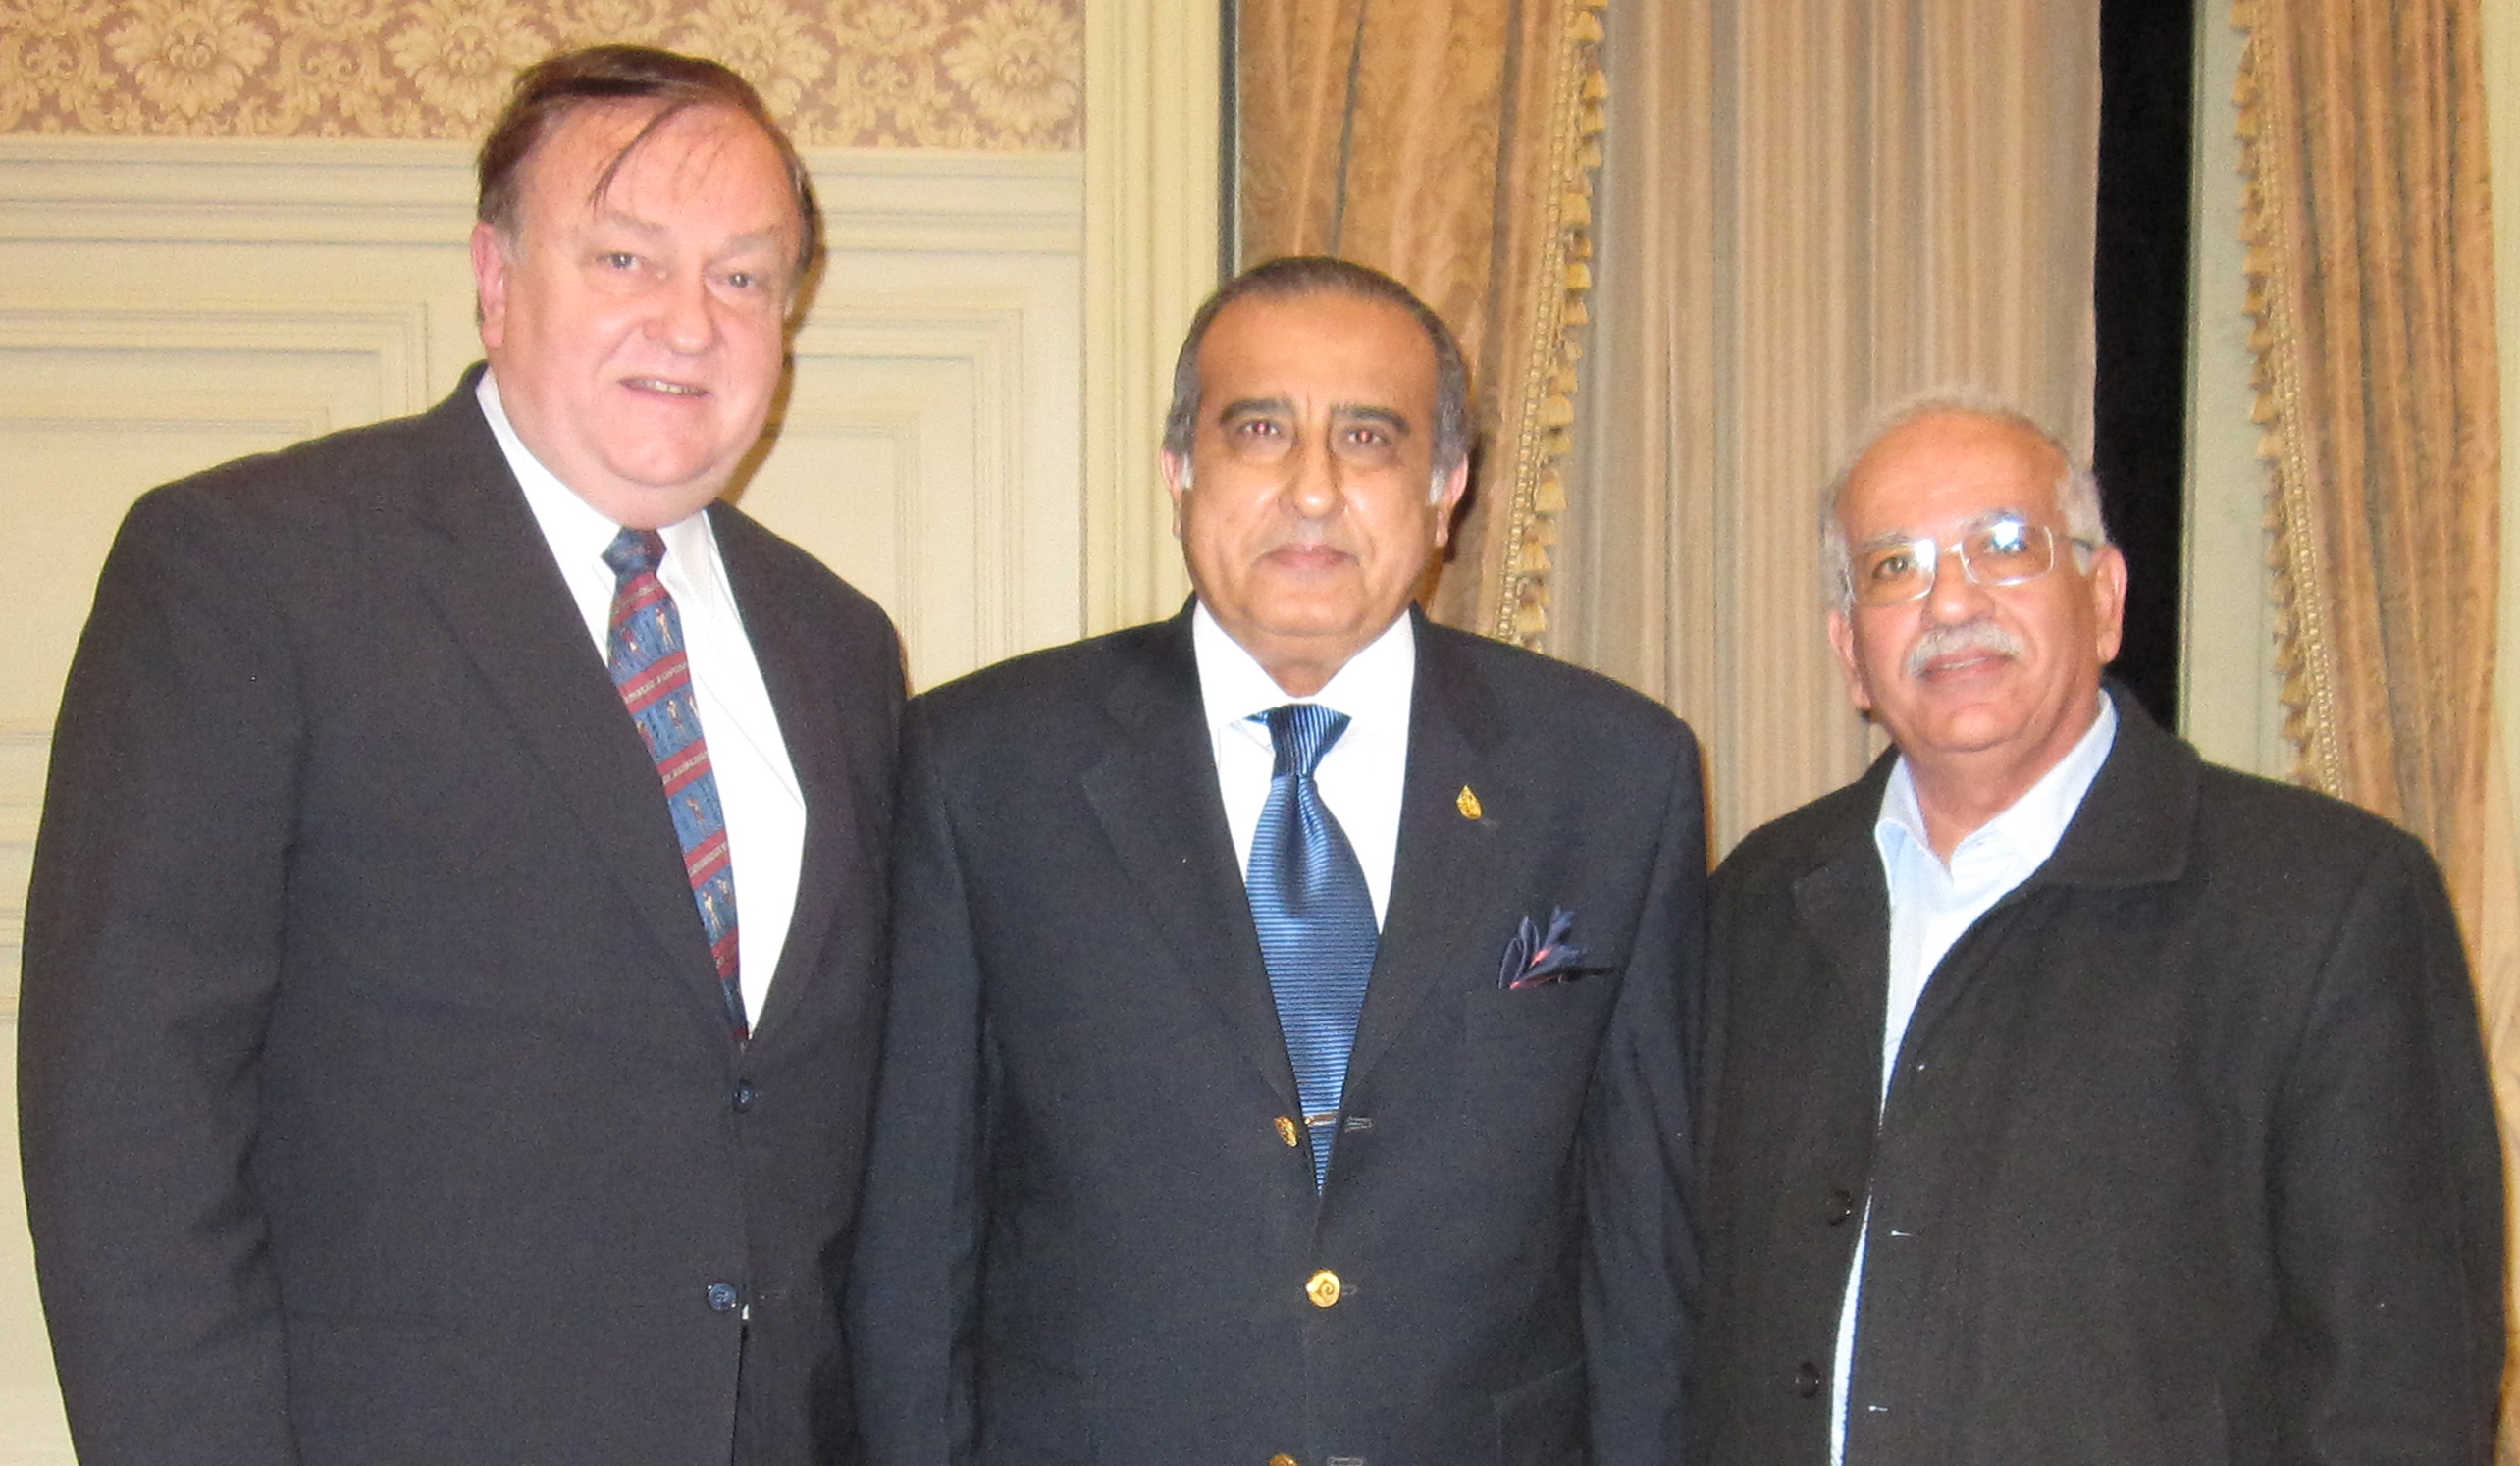 H.E. Ihab Farouk, Post-Revolution meeting Alexandria March 12, 2011, with Dr. Moussen Bai'ad of As-Shams University